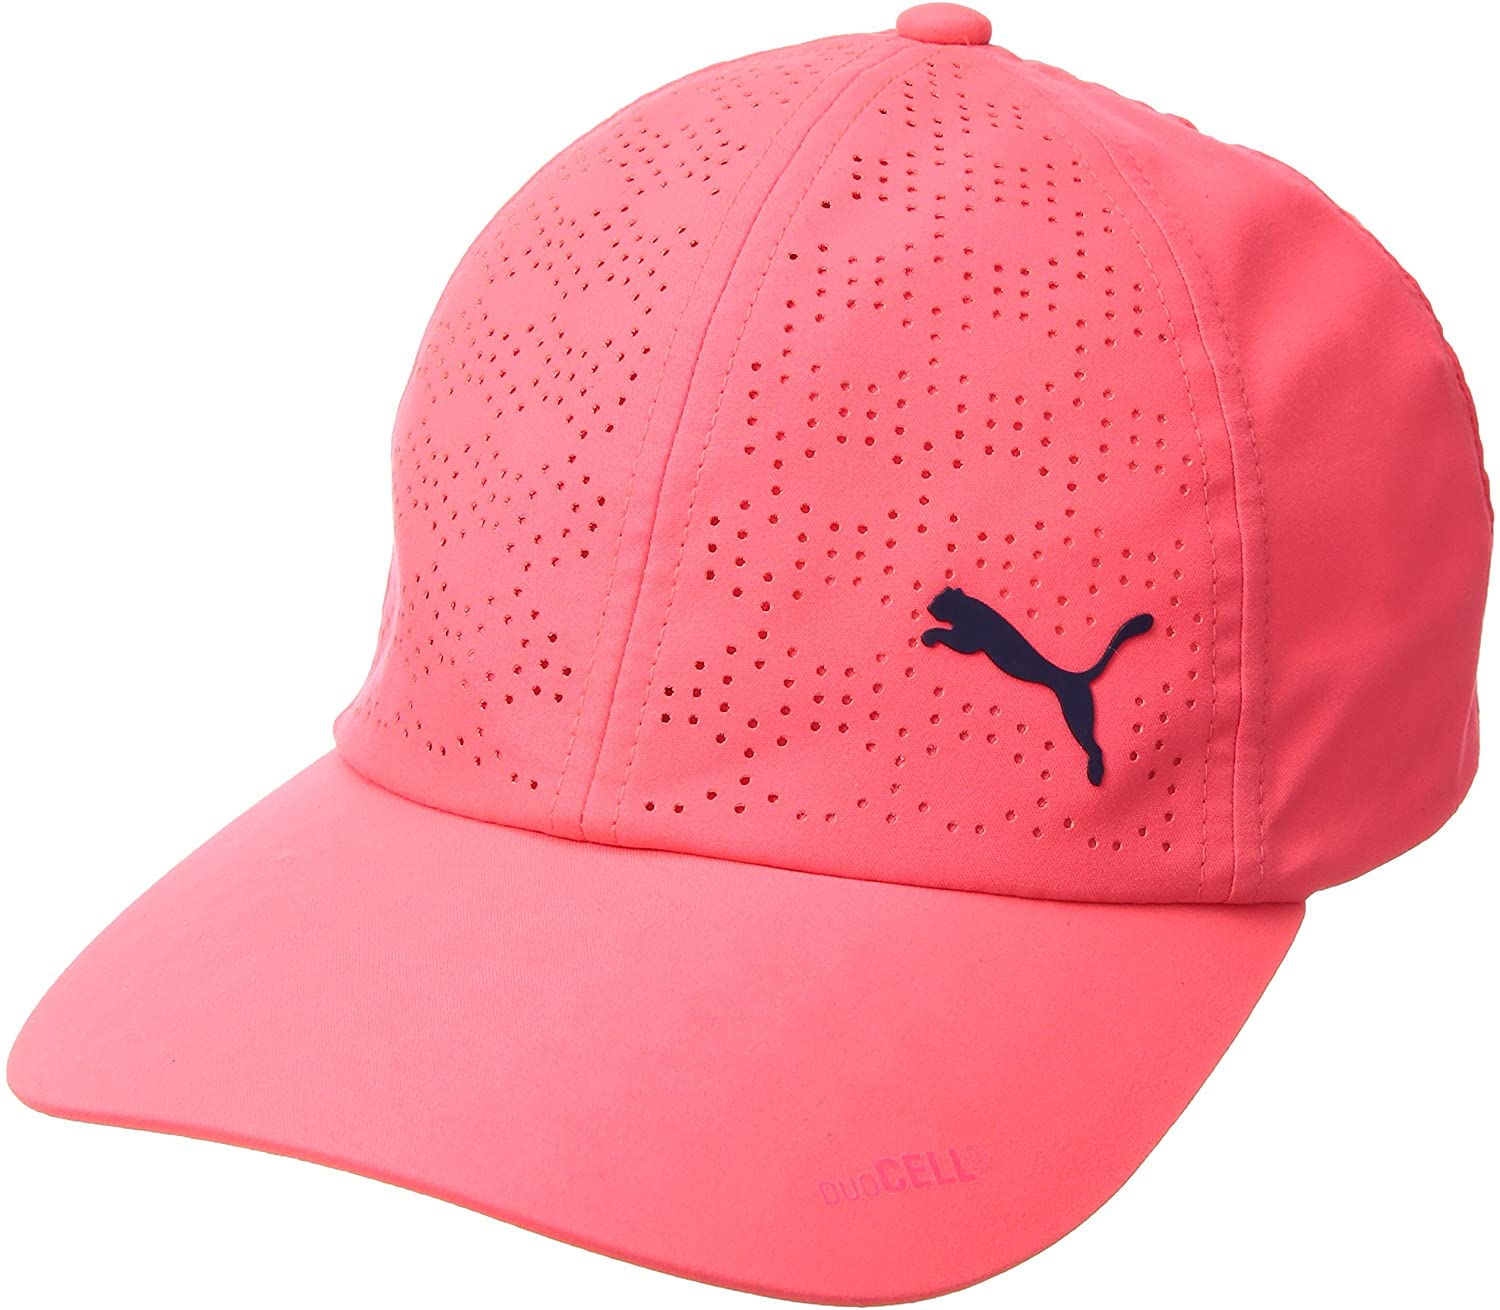 Womens Cobra 2018 Duocell Golf Hats